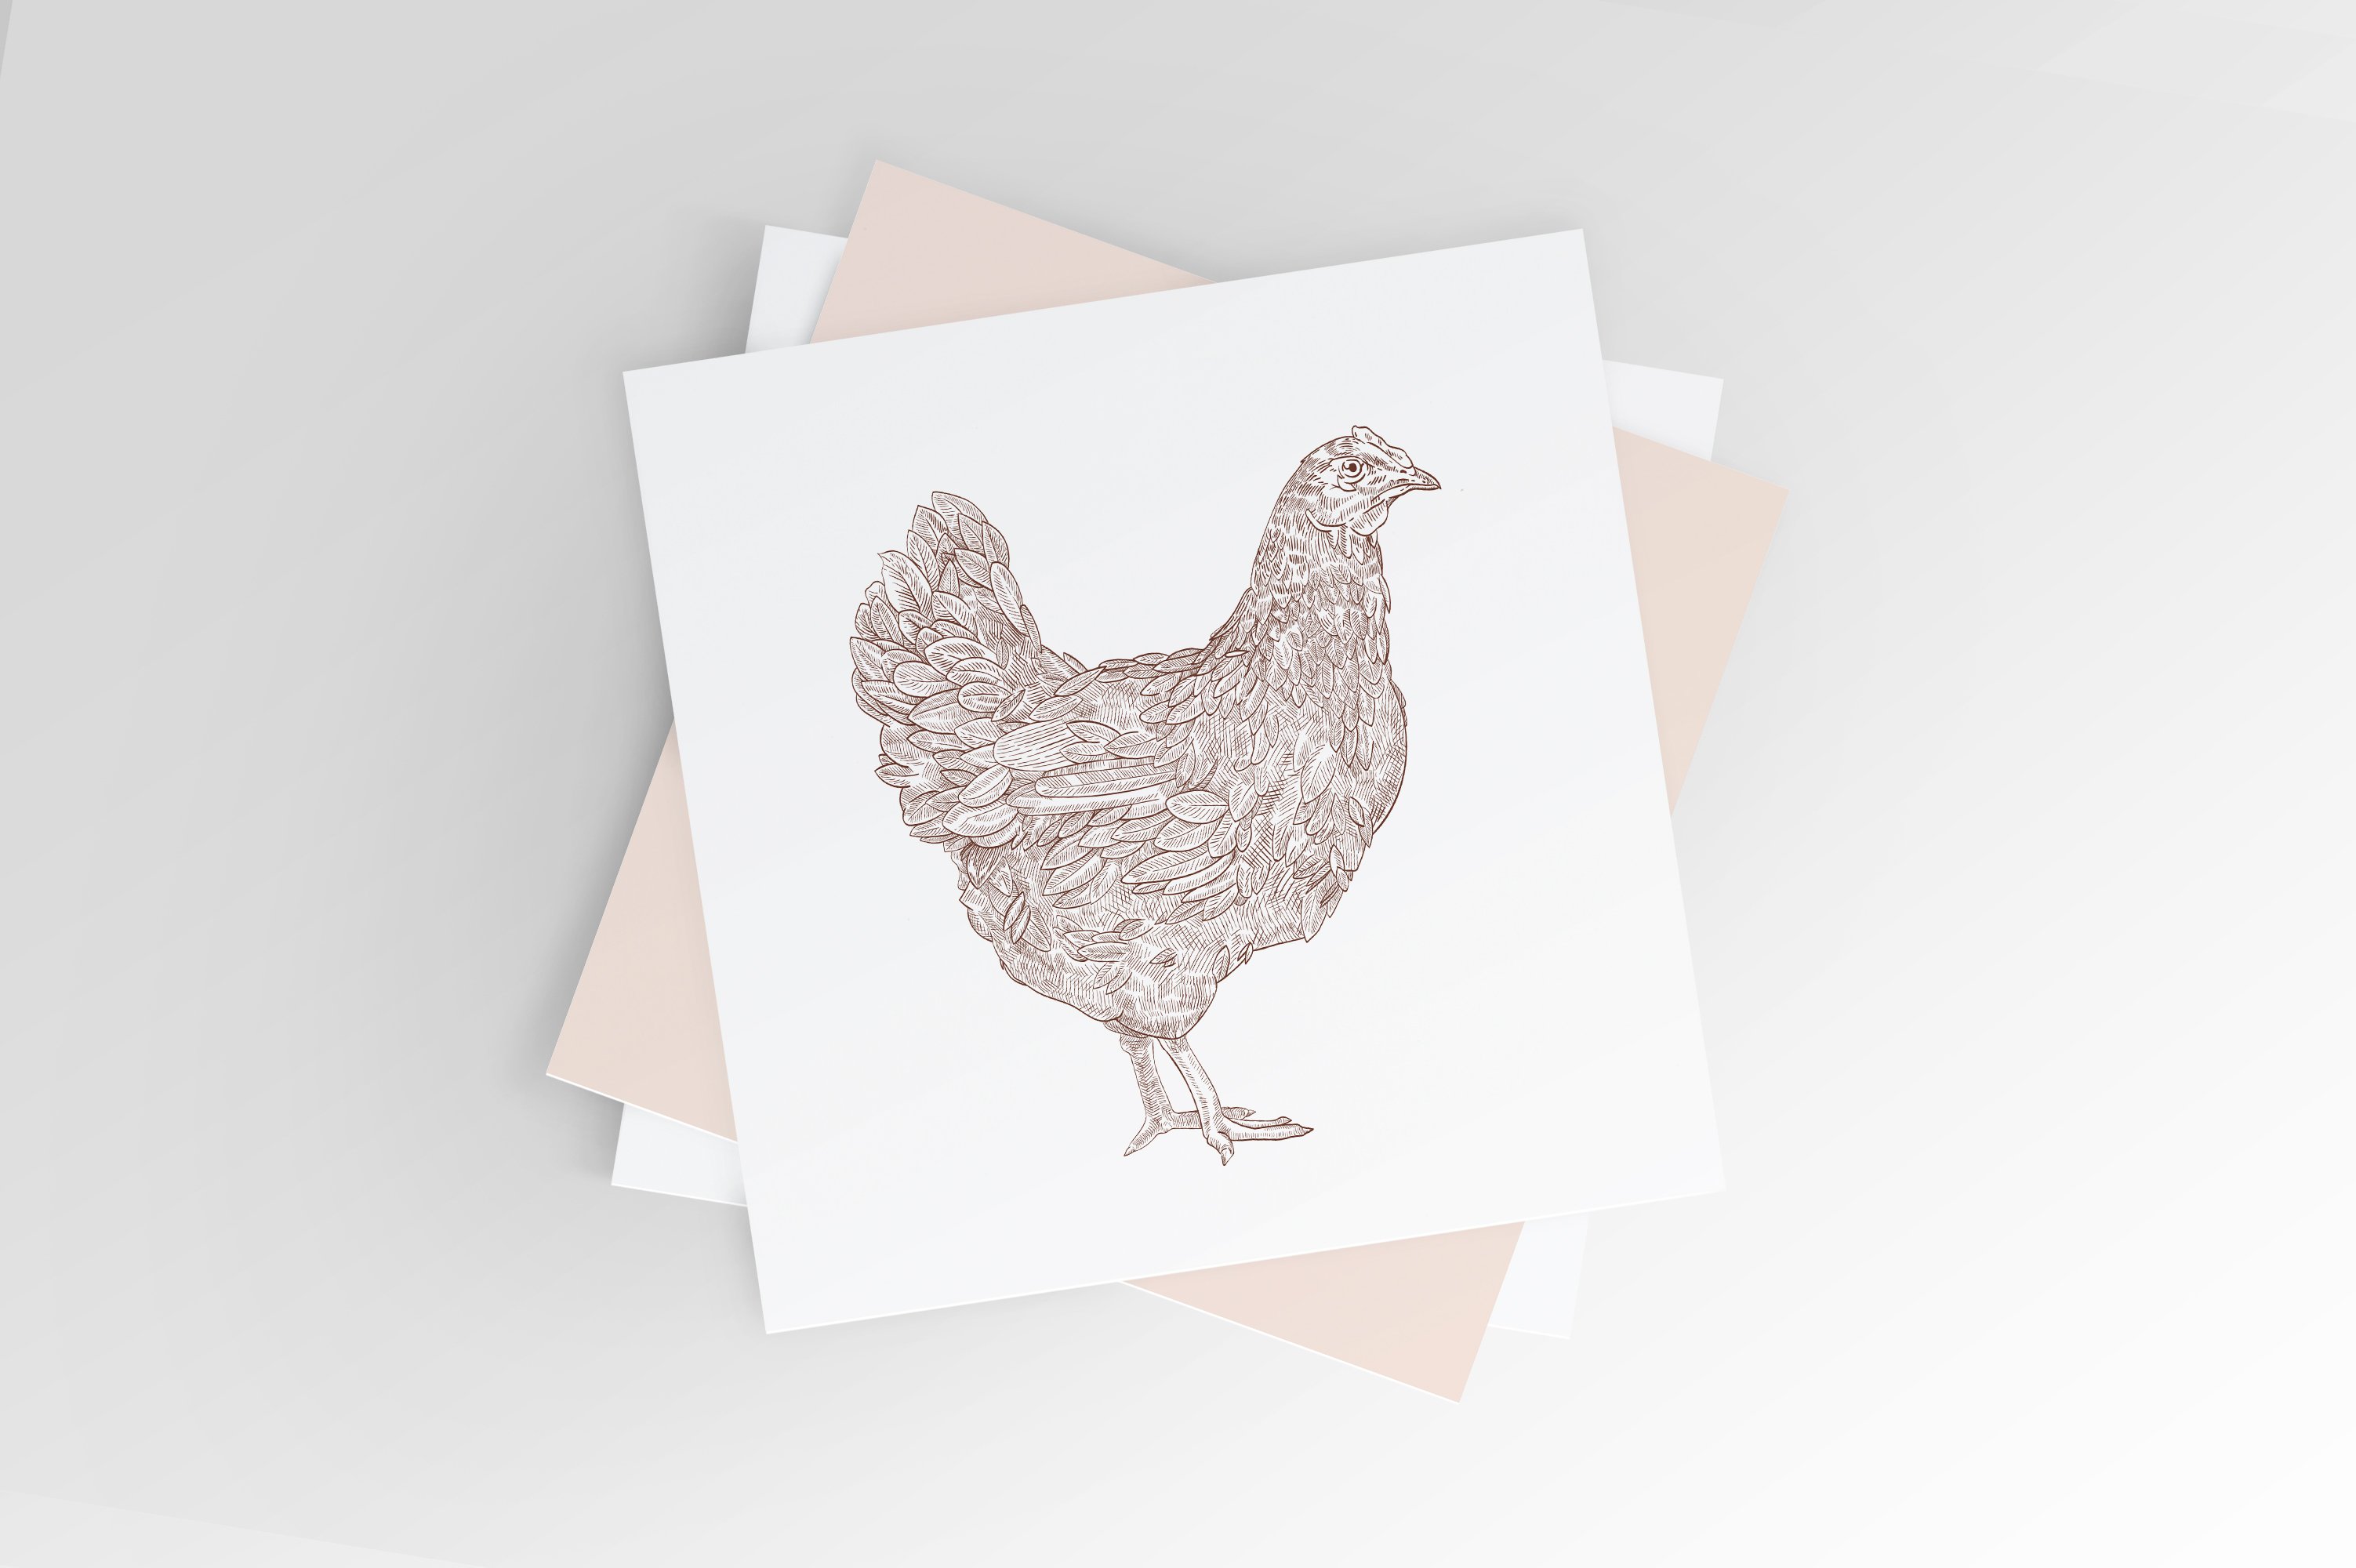 Chicken, hen illustration preview image.